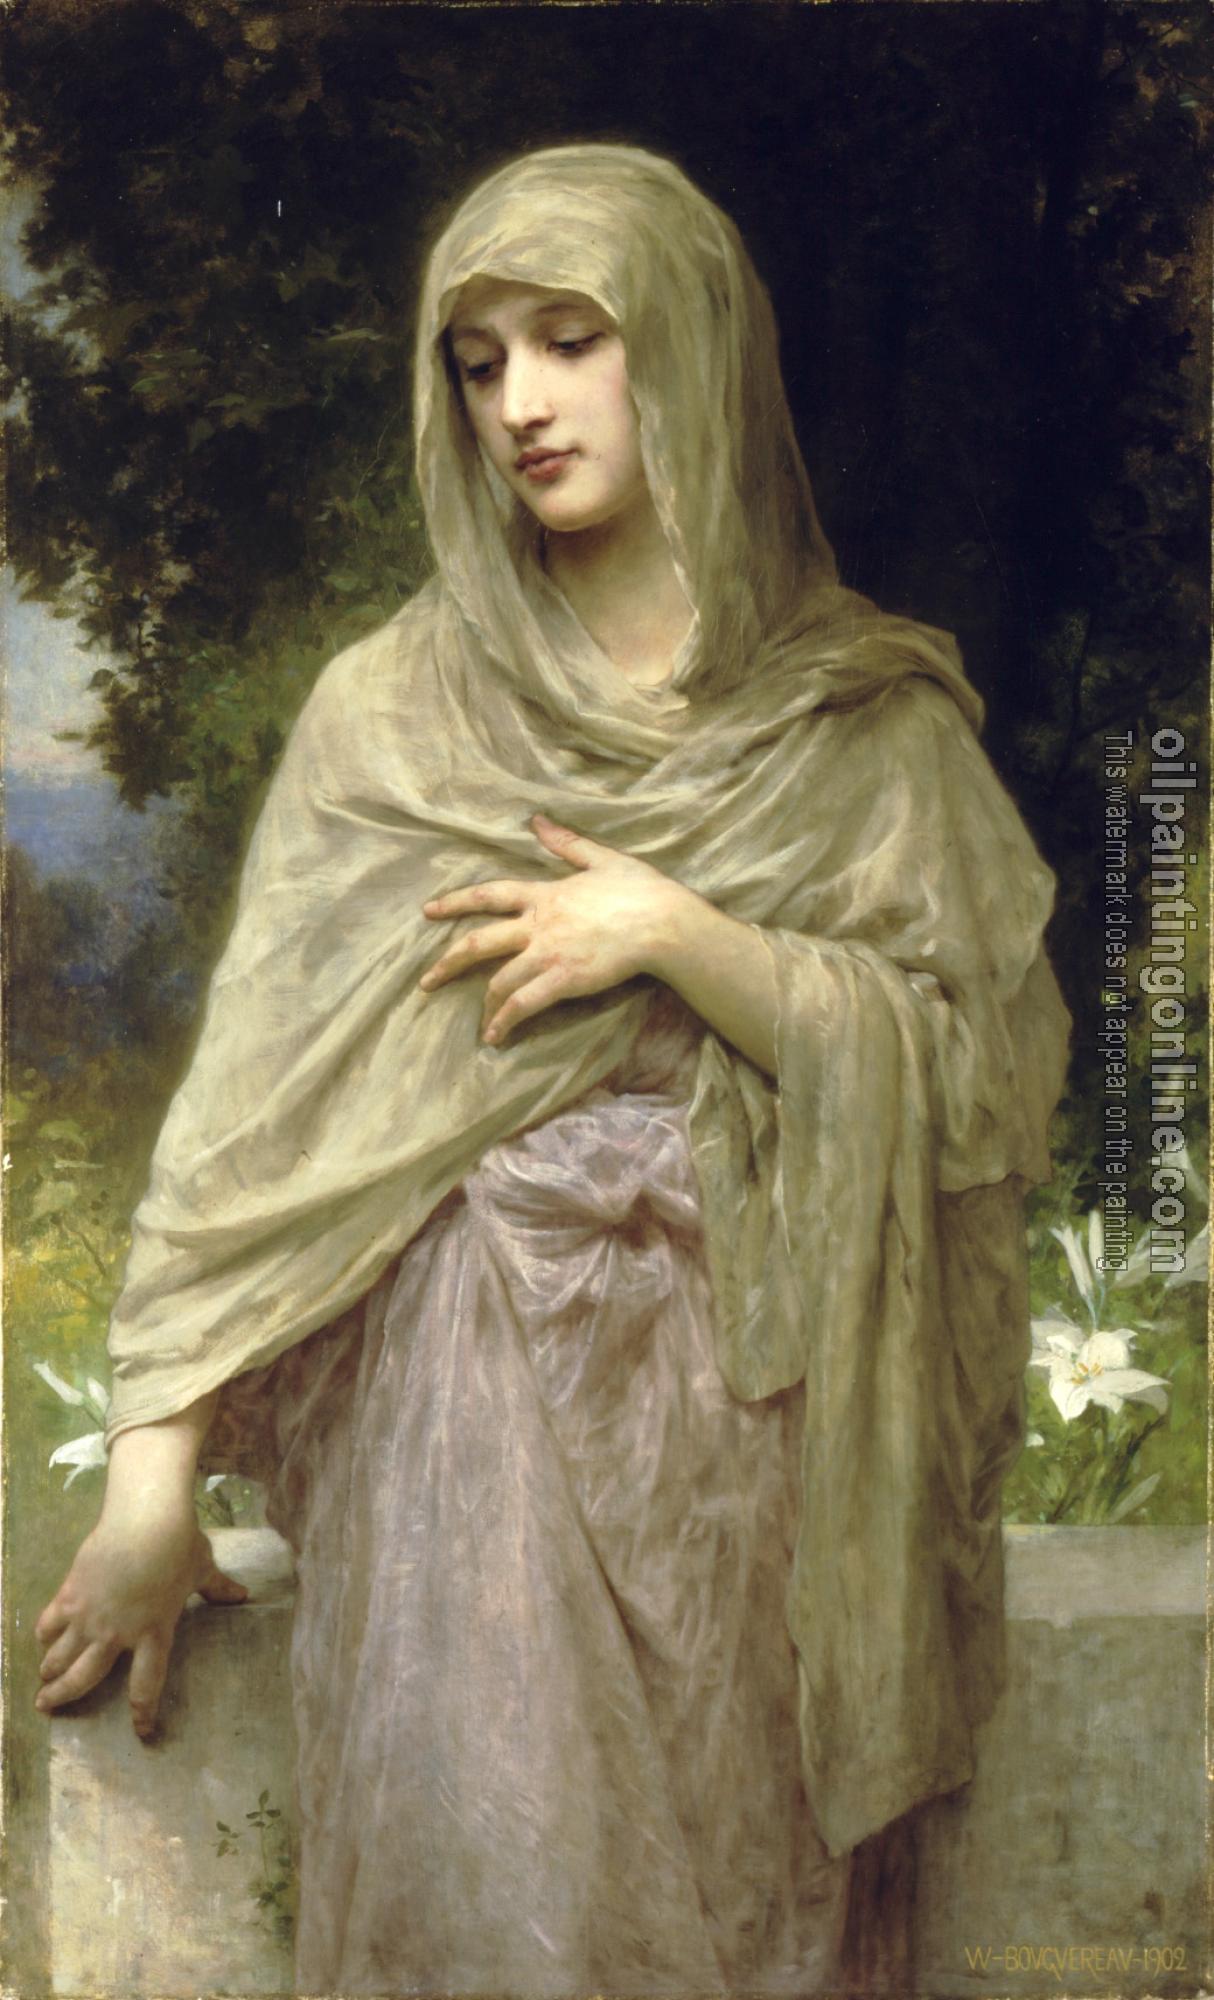 Bouguereau, William-Adolphe - Modestie(Modesty)